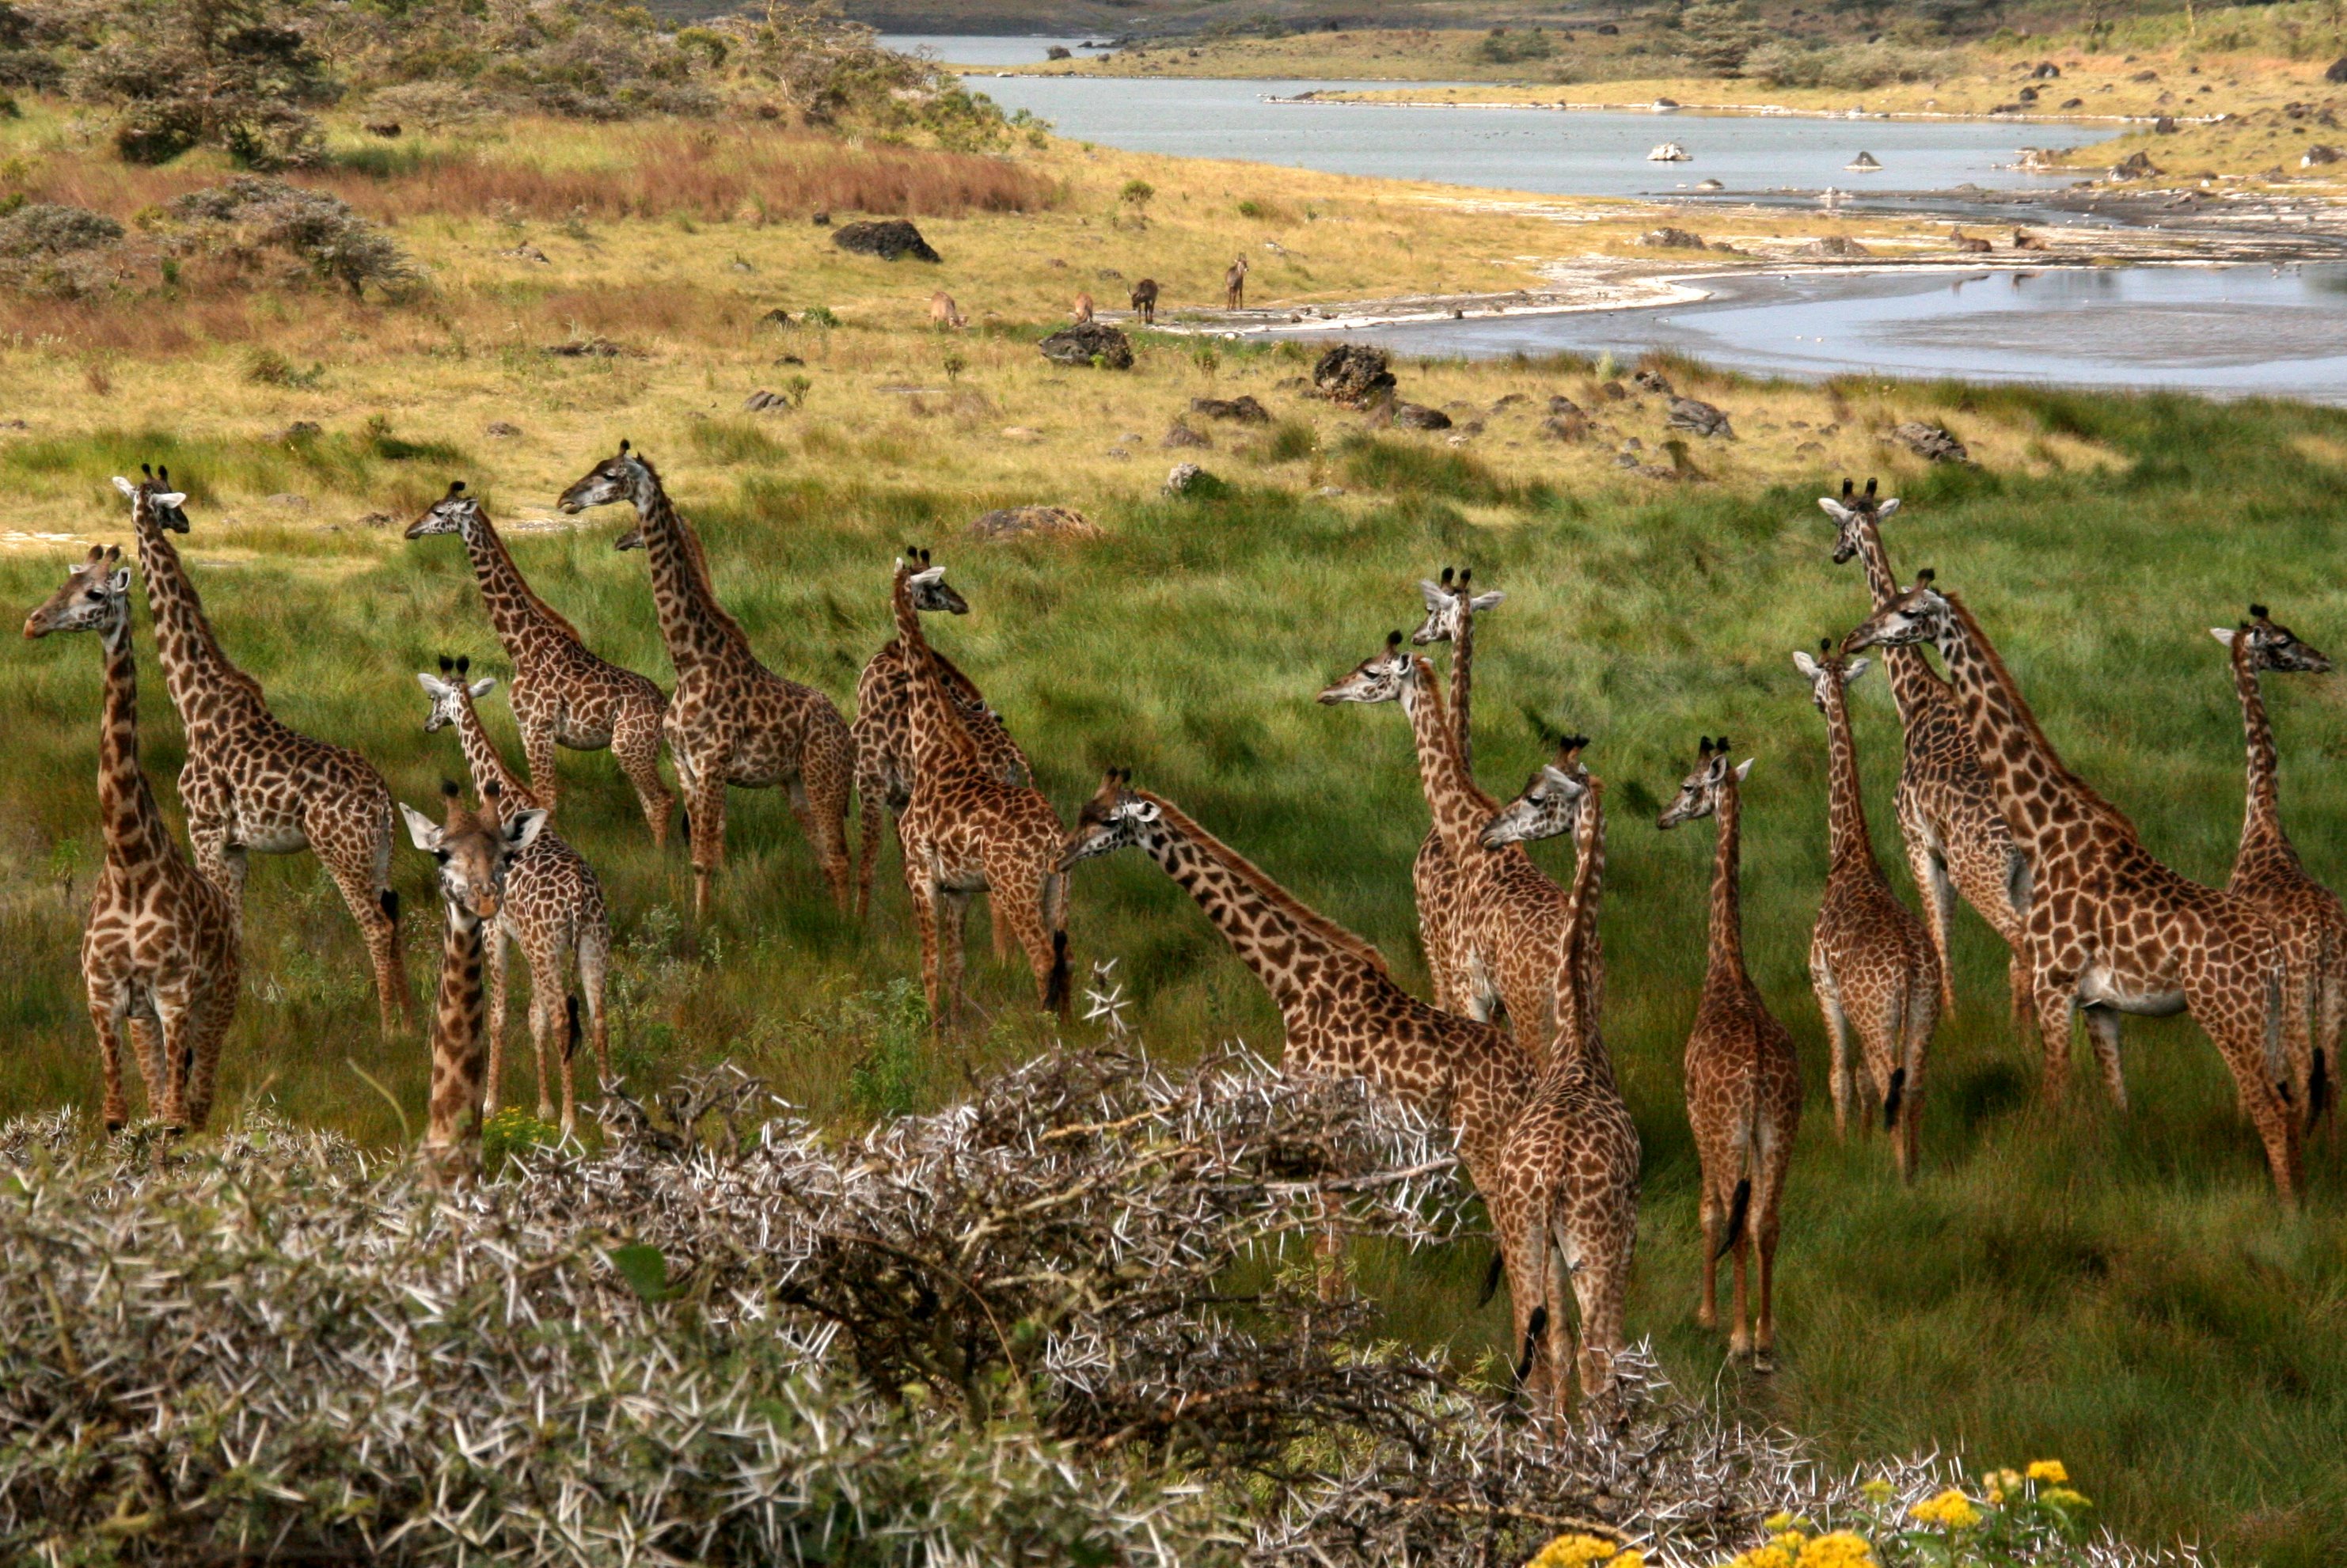 Arusha National Park, Lodge Safari and Camping Safari are Available